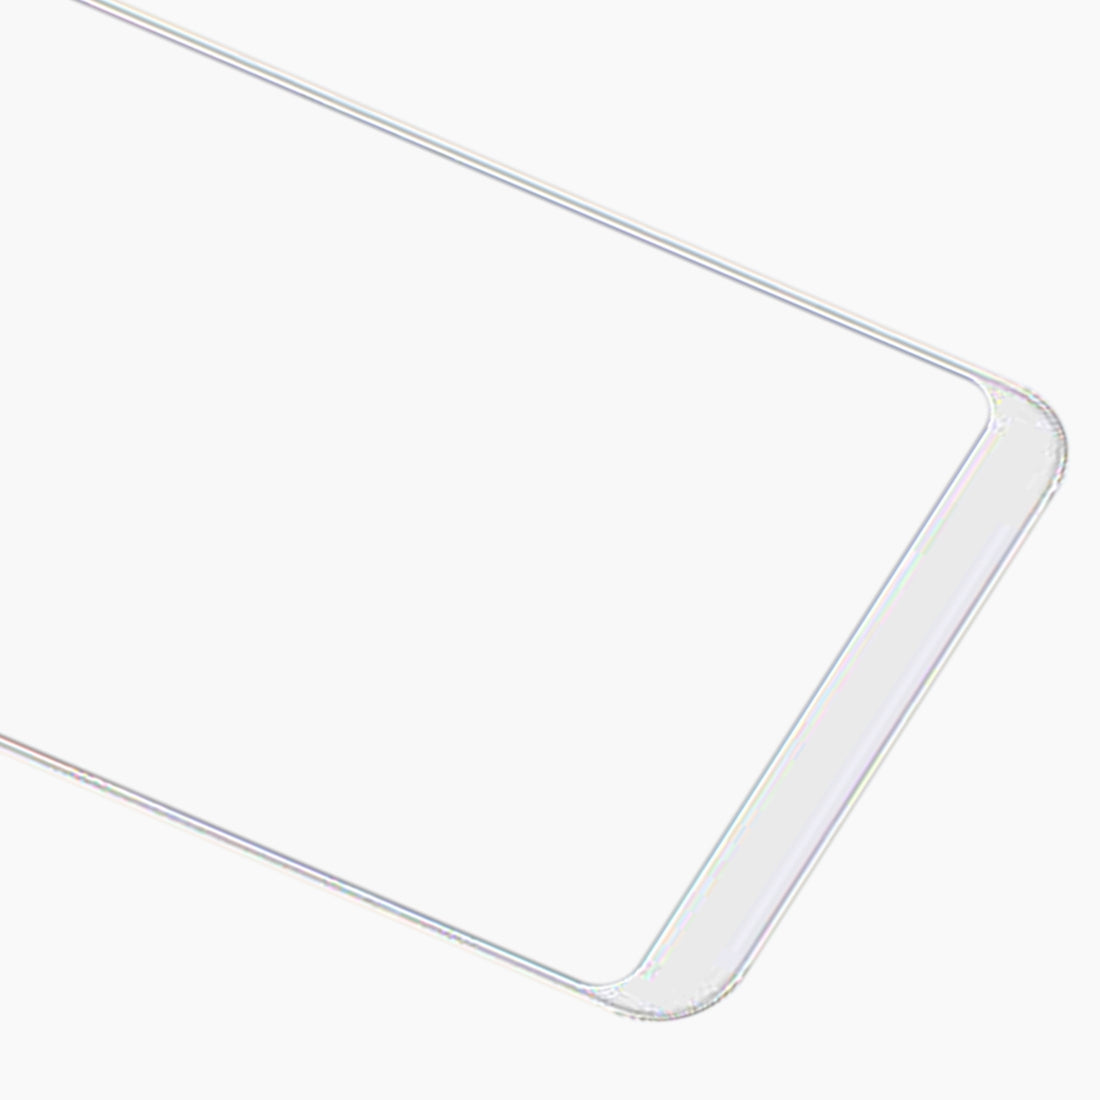 Cristal Pantalla Frontal + Adhesivo OCA Xiaomi Redmi Note 5 Blanco